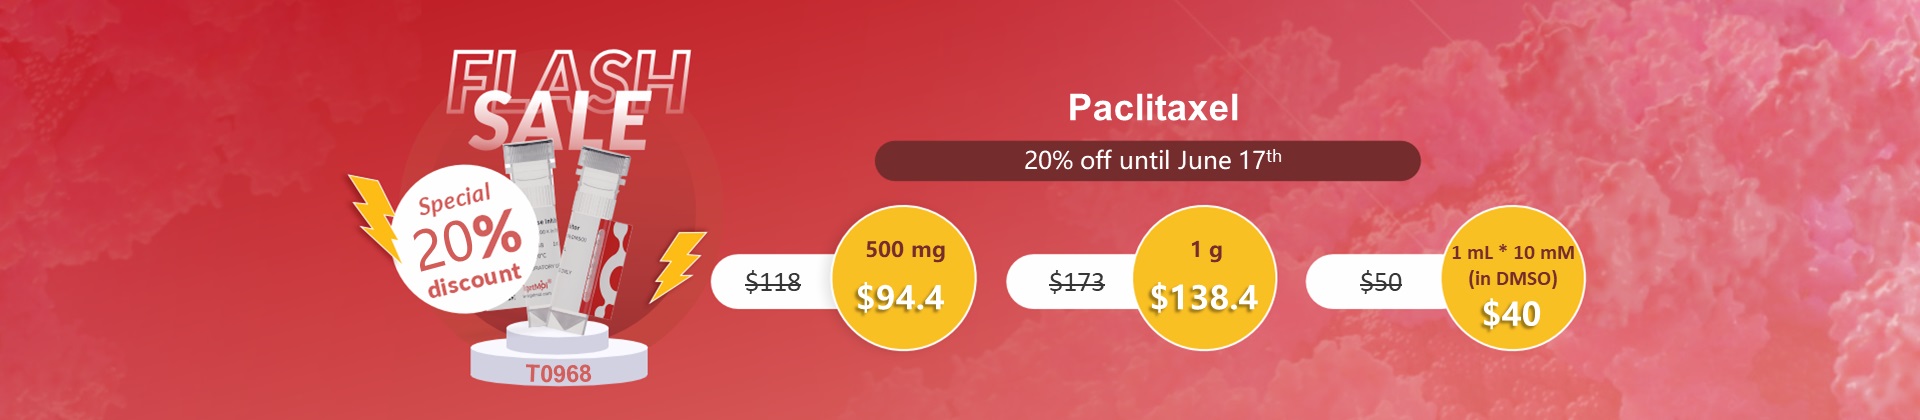 Paclitaxel 80% discount